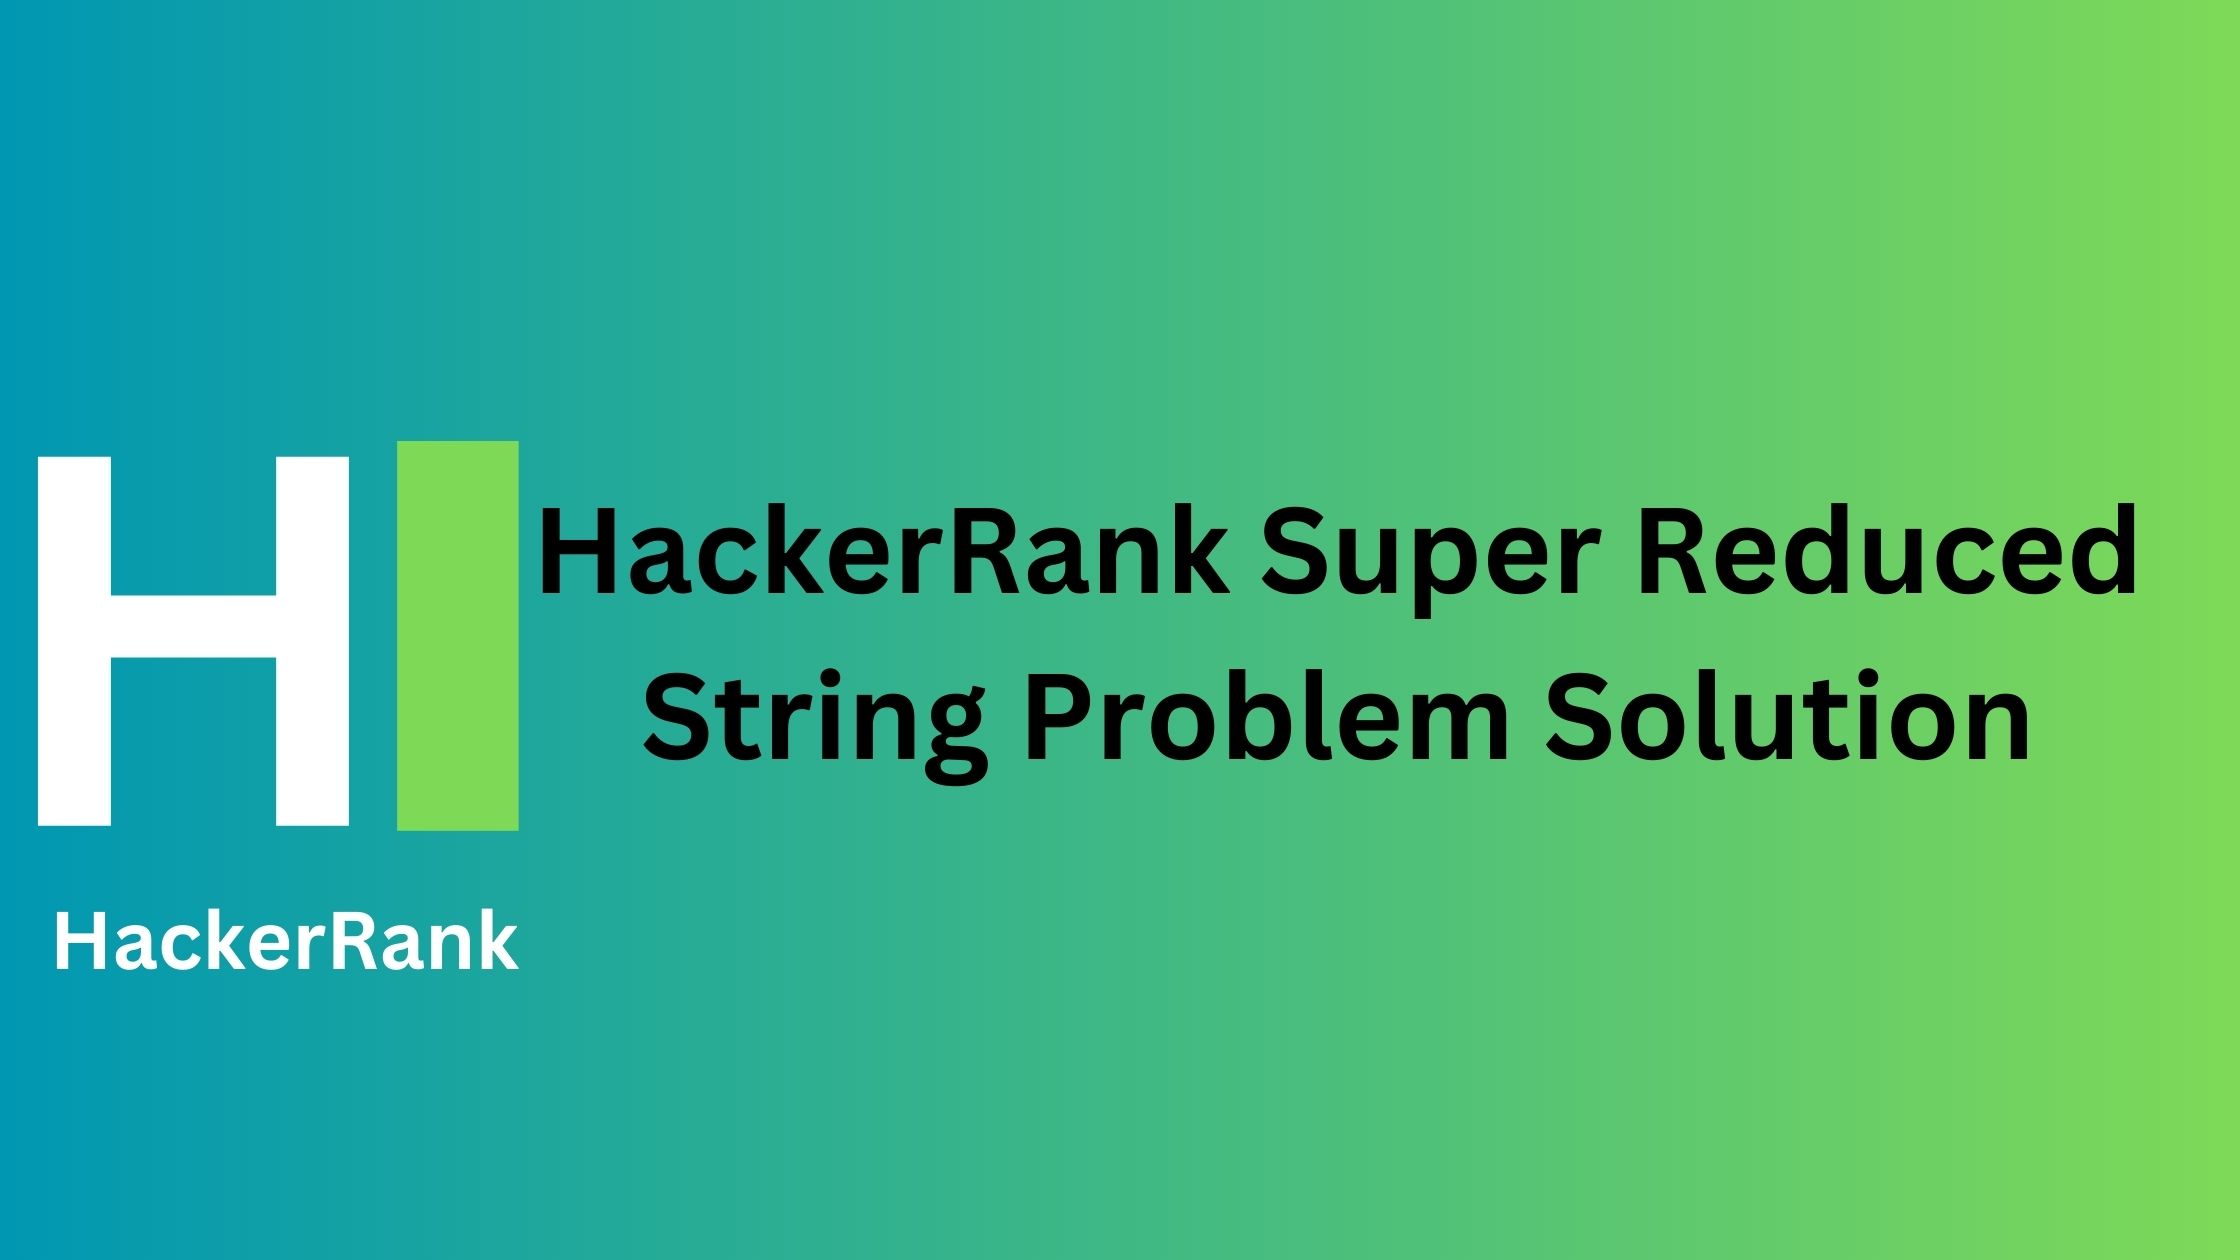 HackerRank Super Reduced String Problem Solution